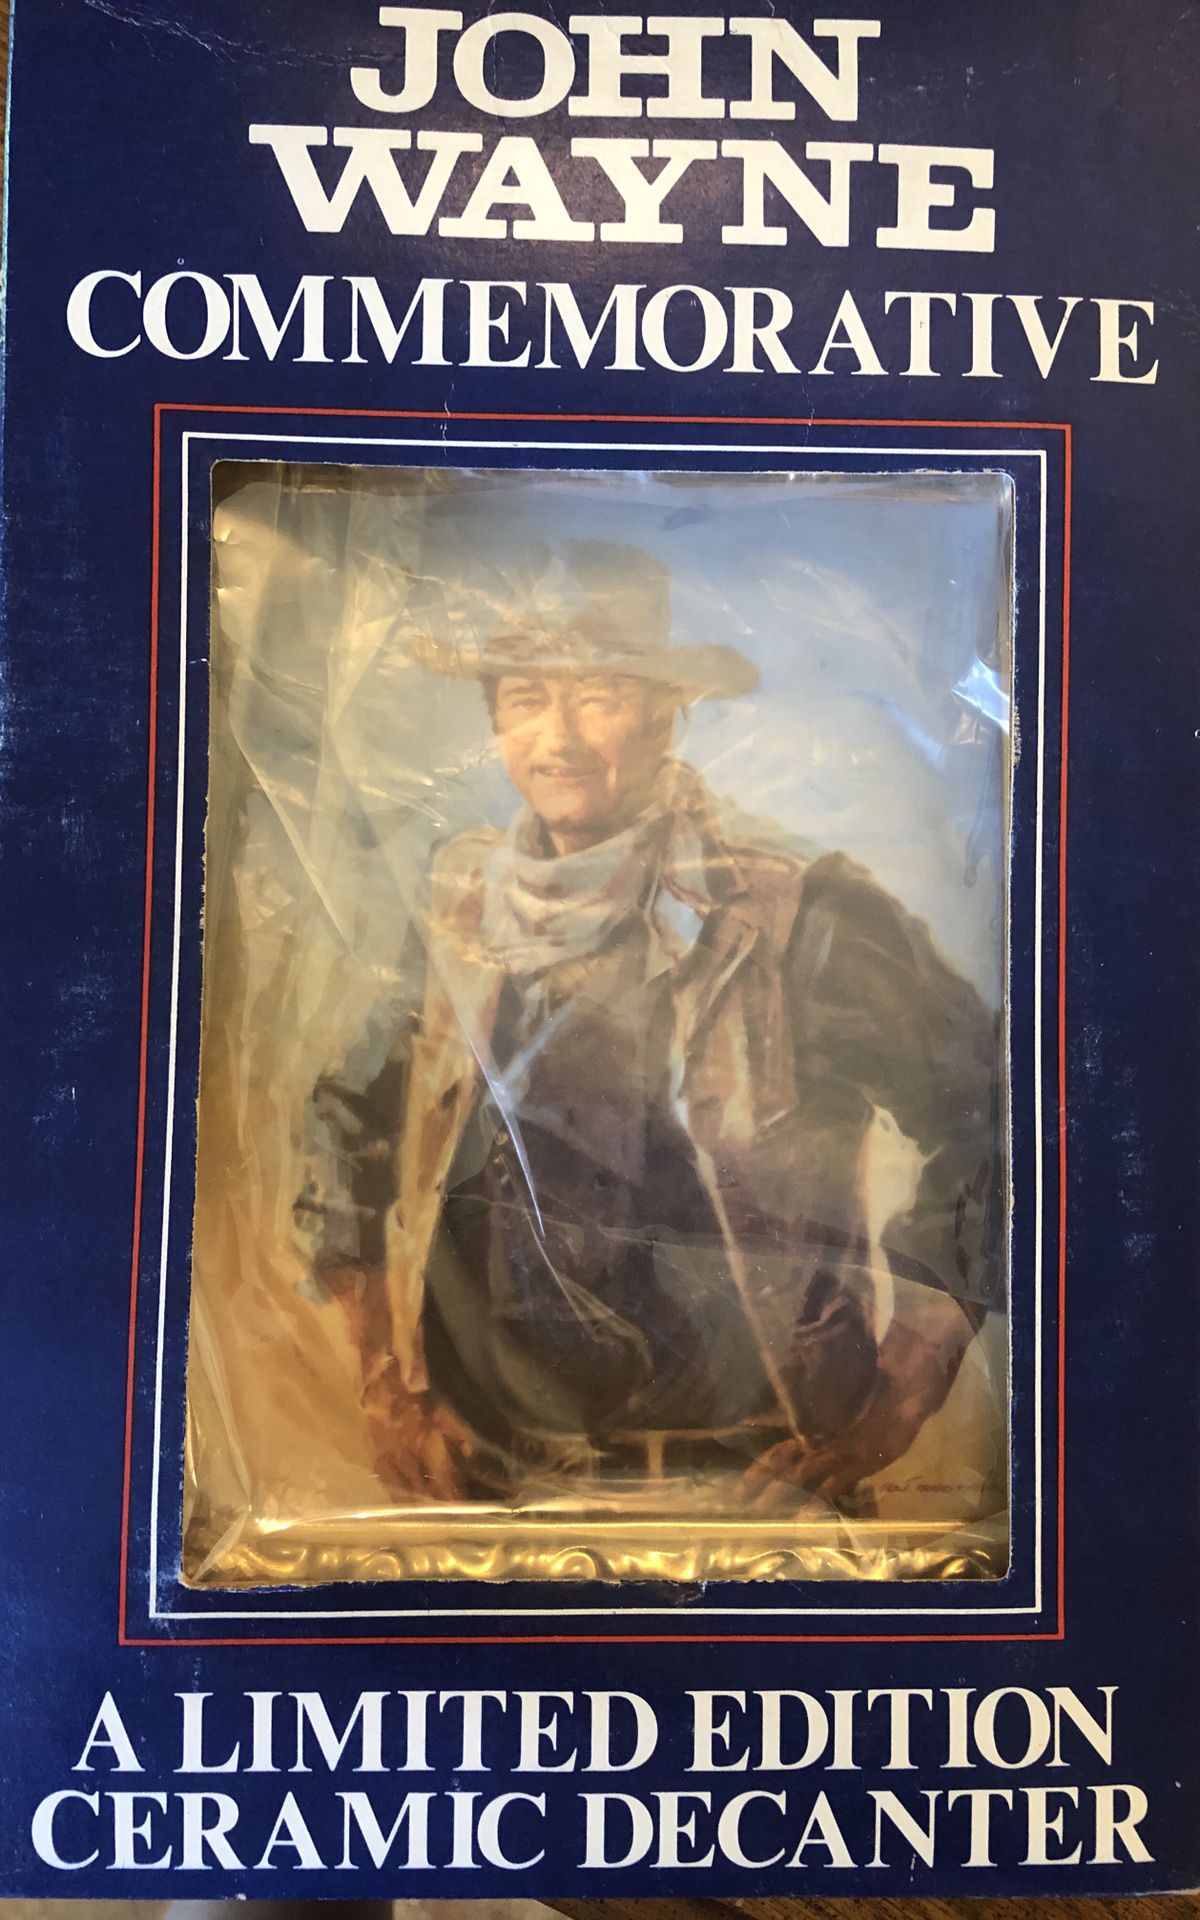 John Wayne commemorative decanter